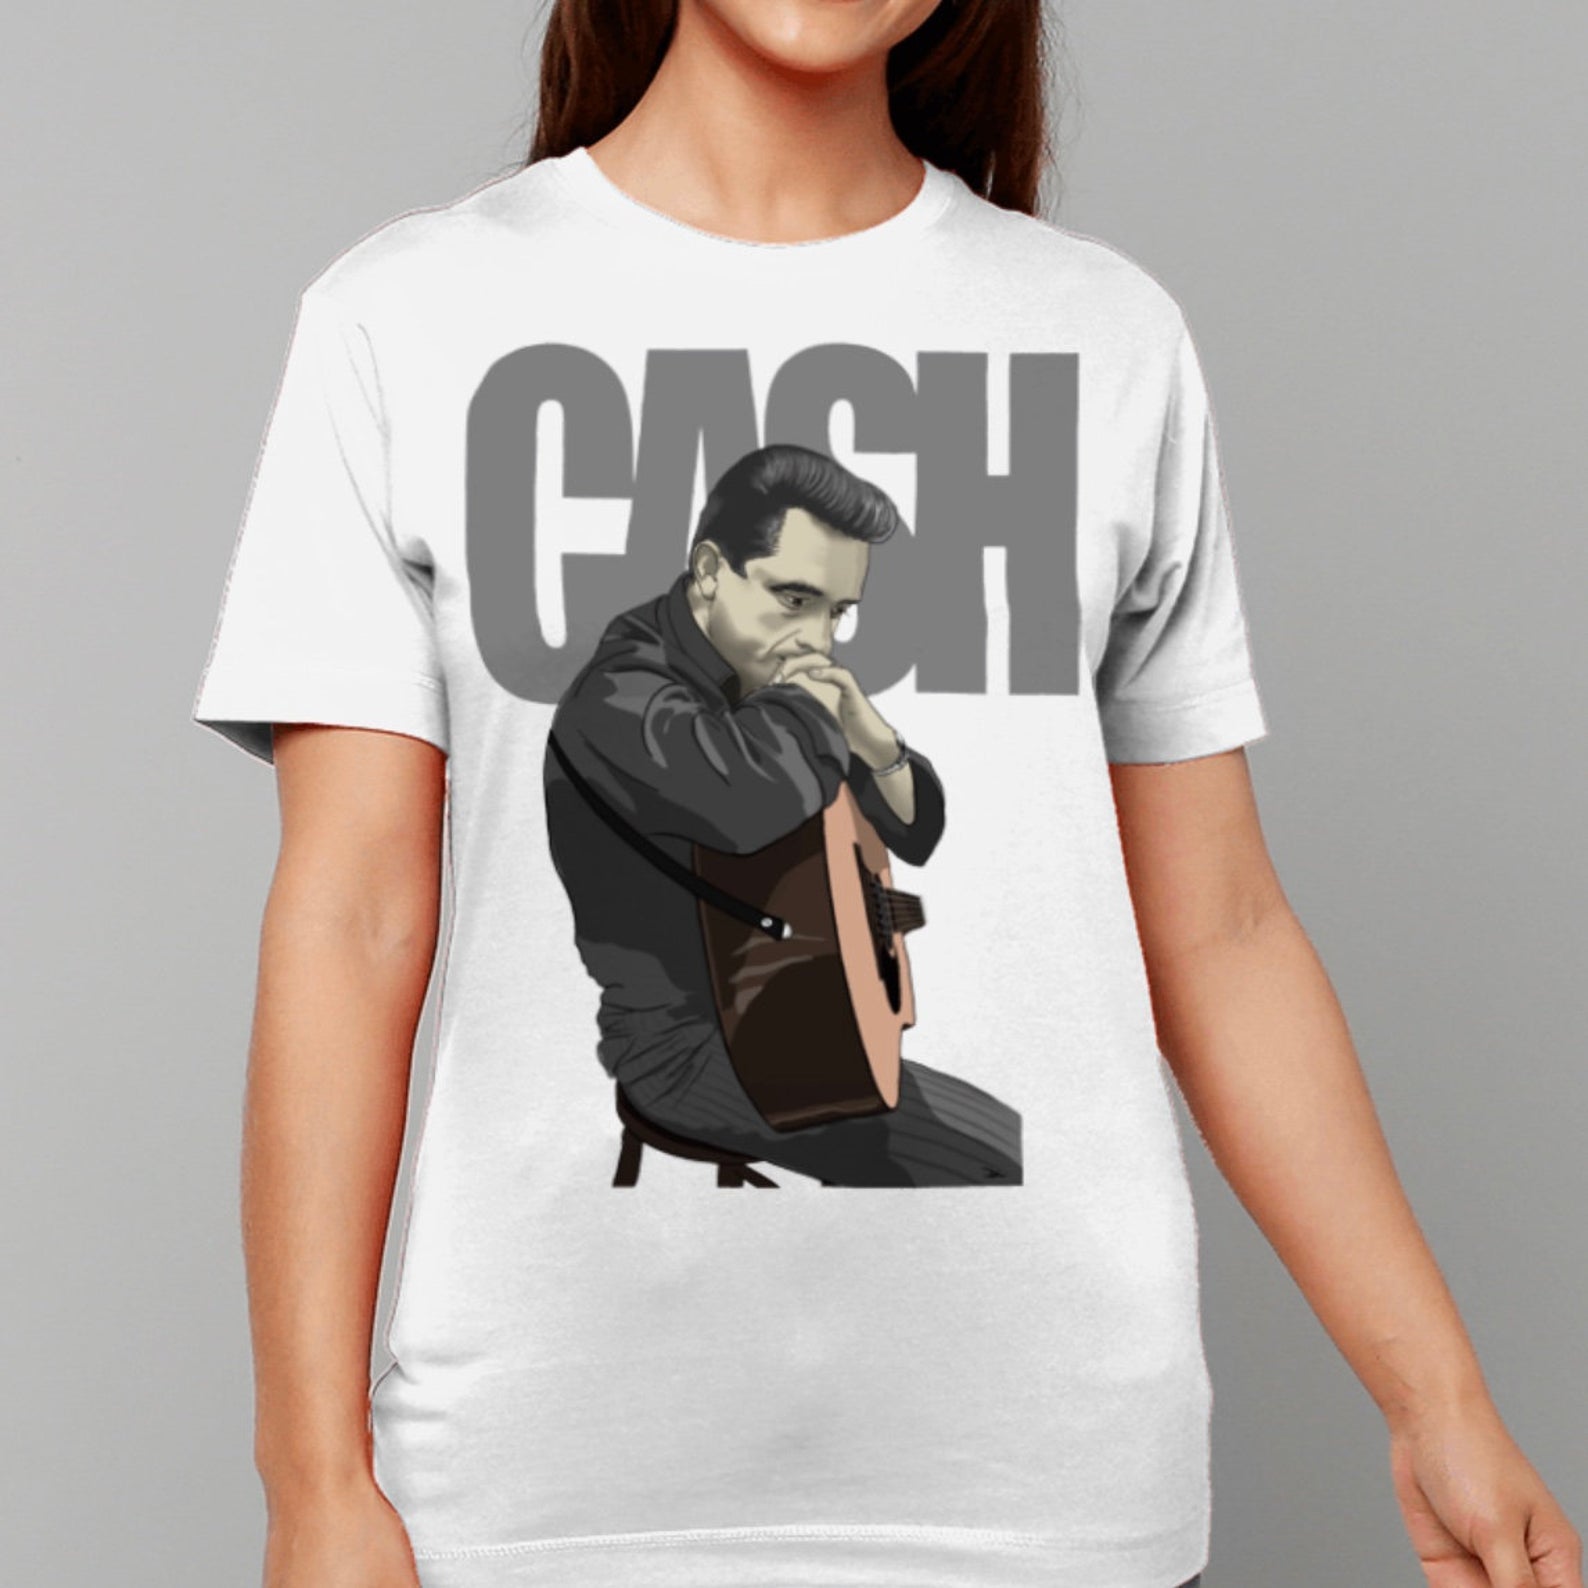 Johnny Cash Nashville Tour Print Harajuku Top Casual Ladies Basic O-collar Short Sleeved Women T-shirt Girl,Drop Ship